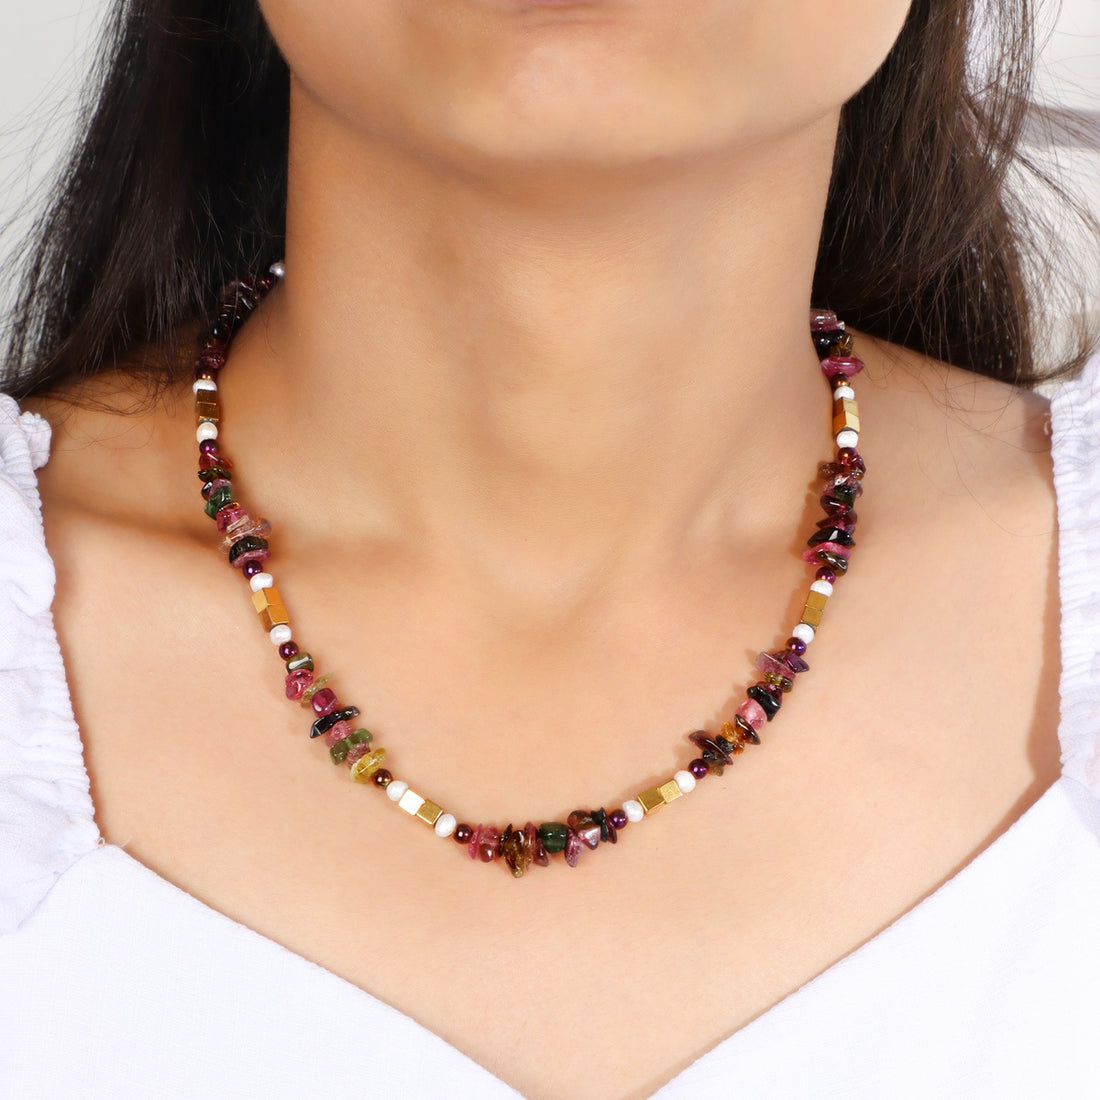 Smooth nugget-shaped Multi Tourmaline gemstone beads